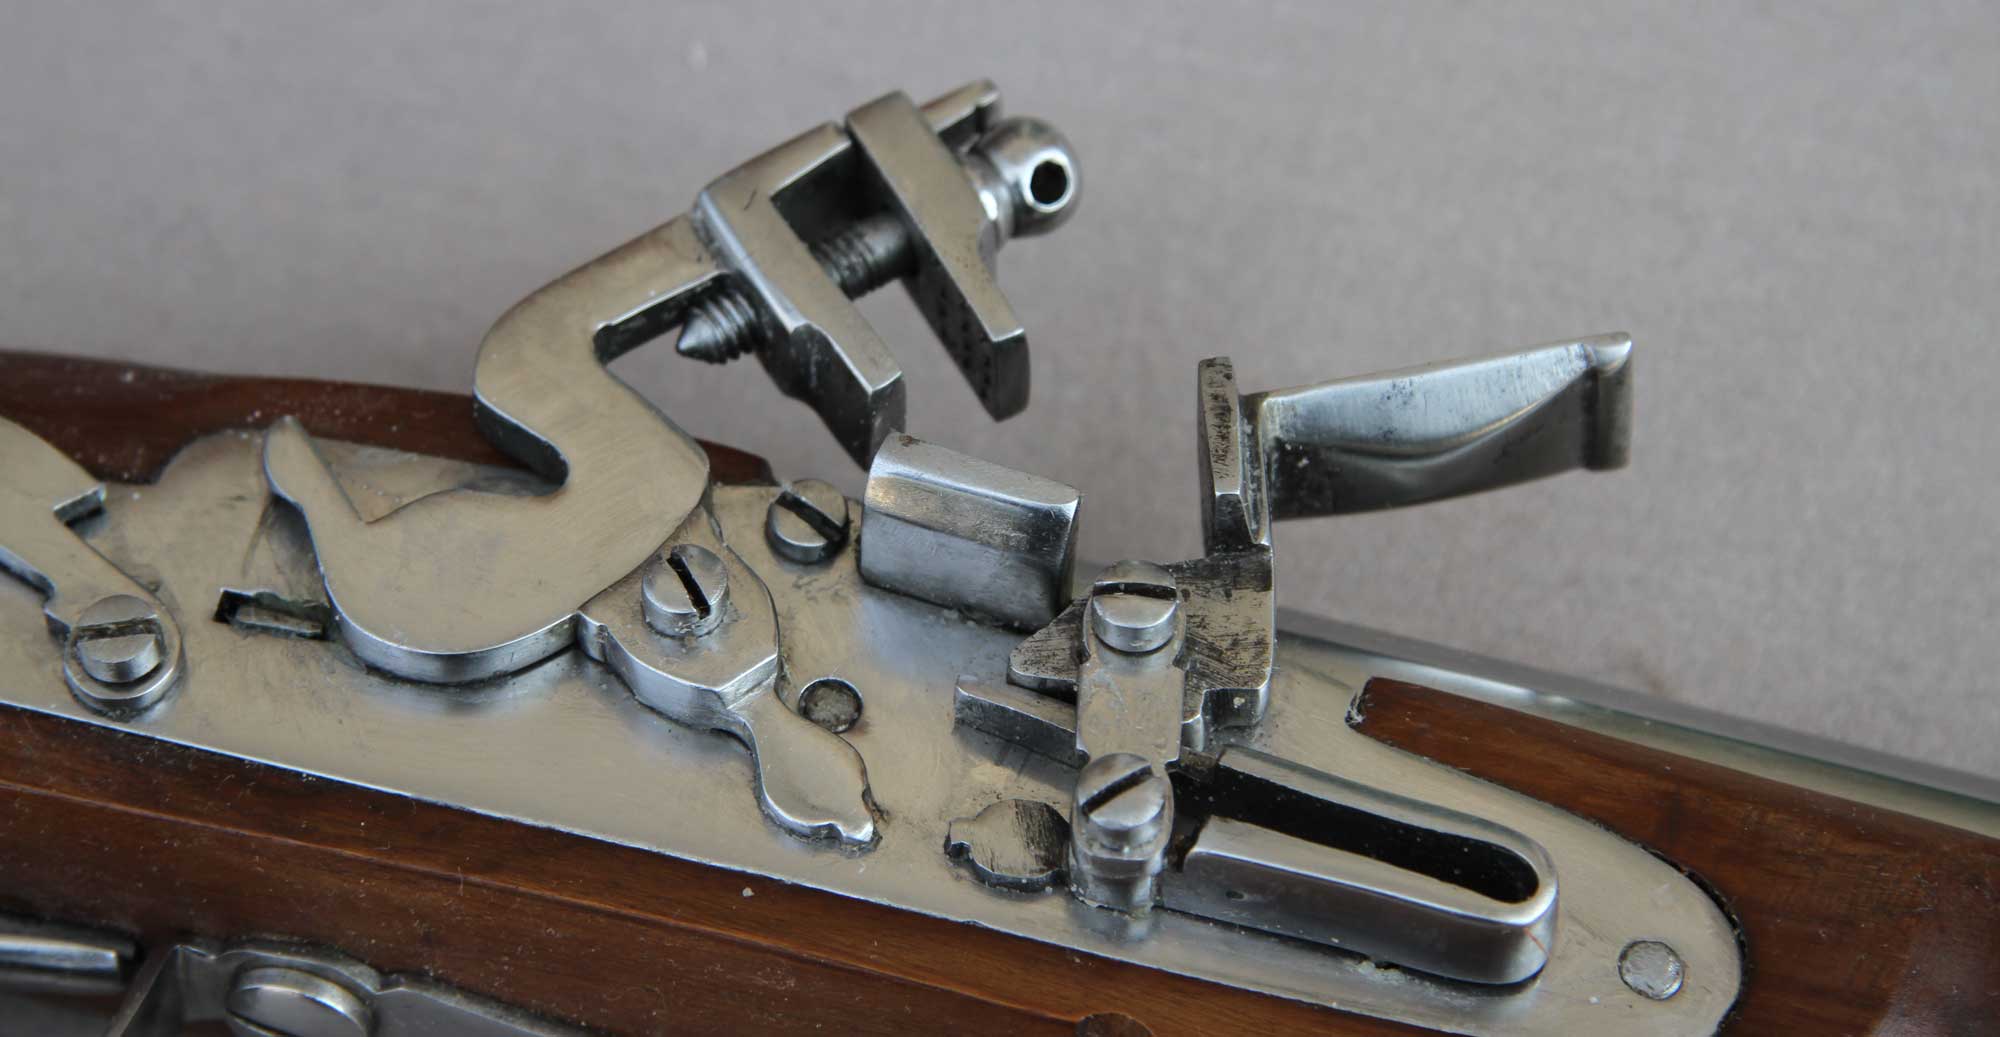 British, Dog Lock pistol - Click Image to Close